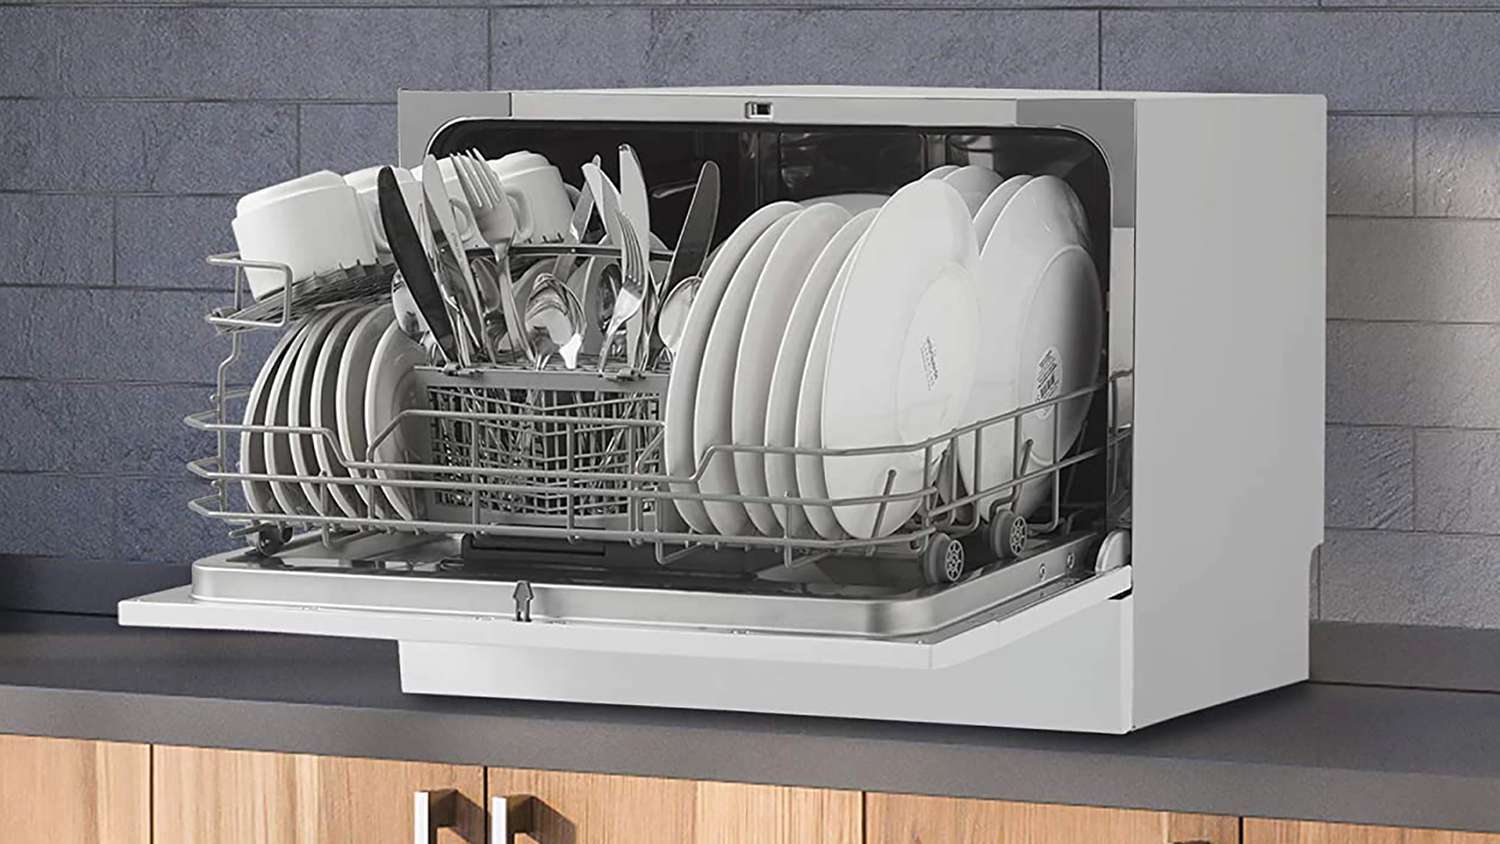 countertop dishwashers